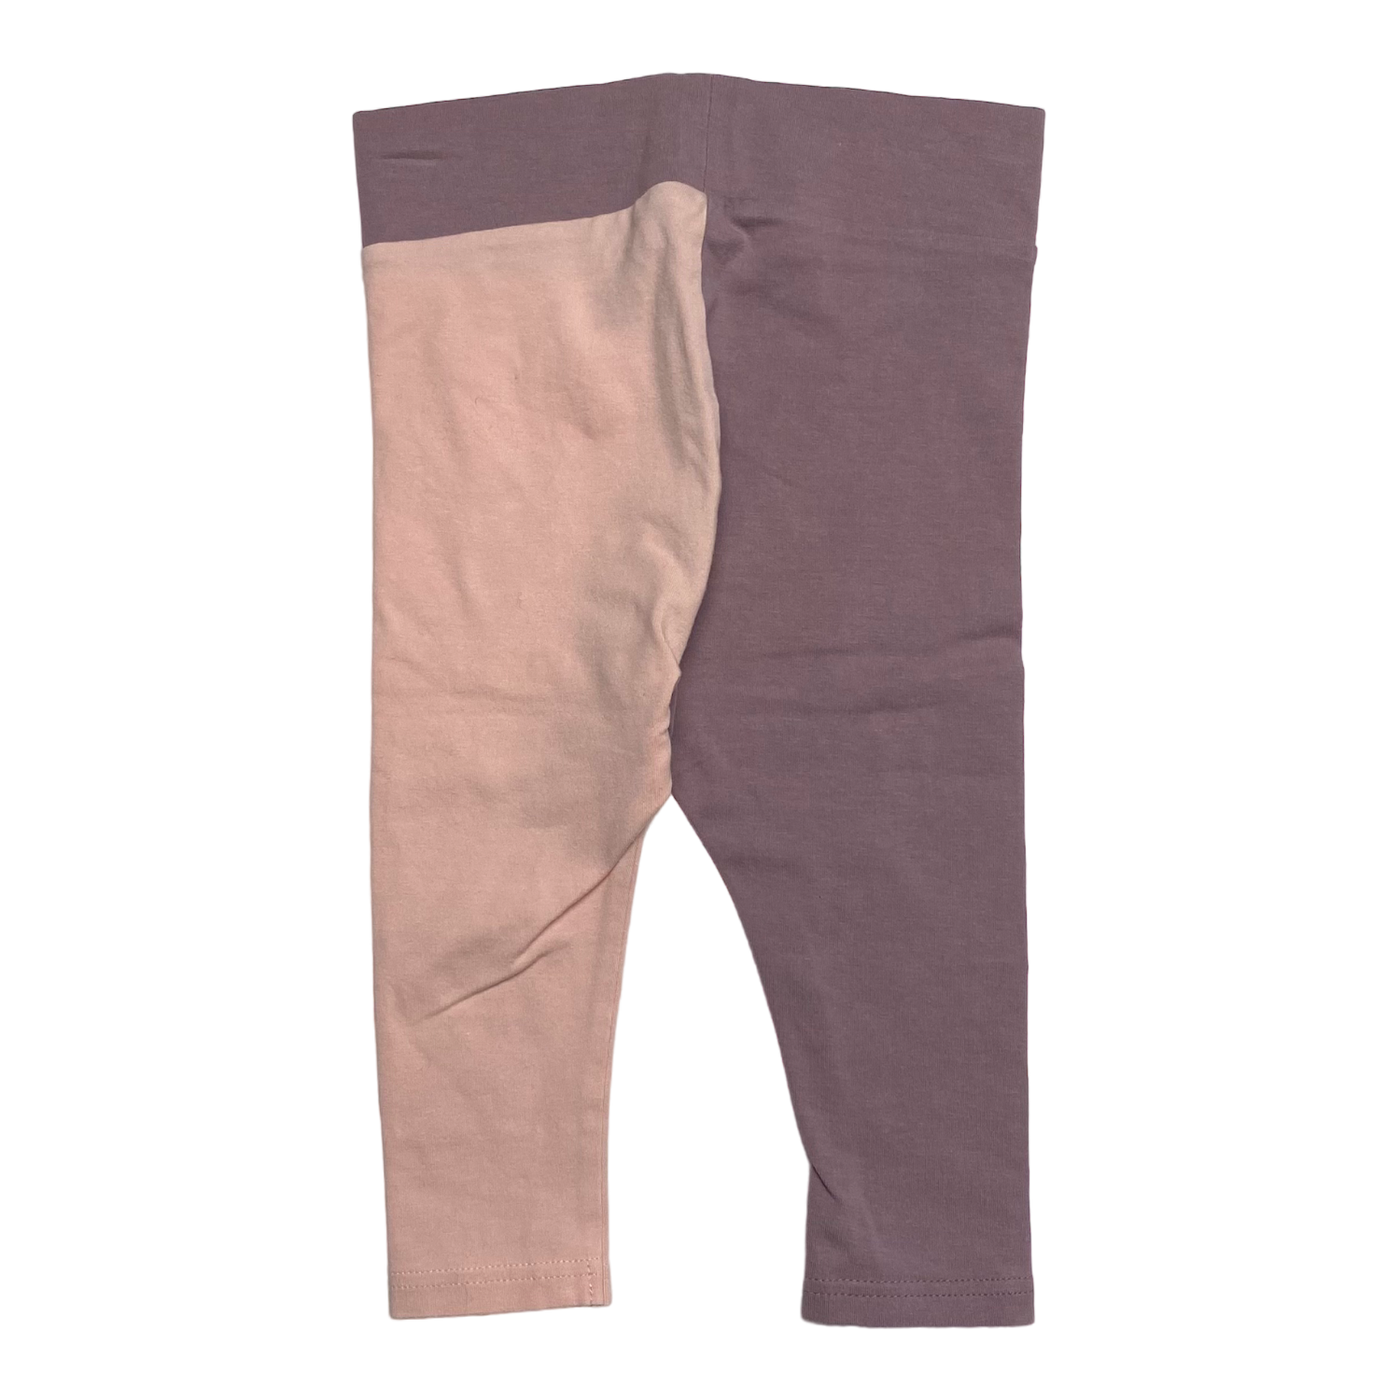 Gugguu leggings, pink/plum | 74cm